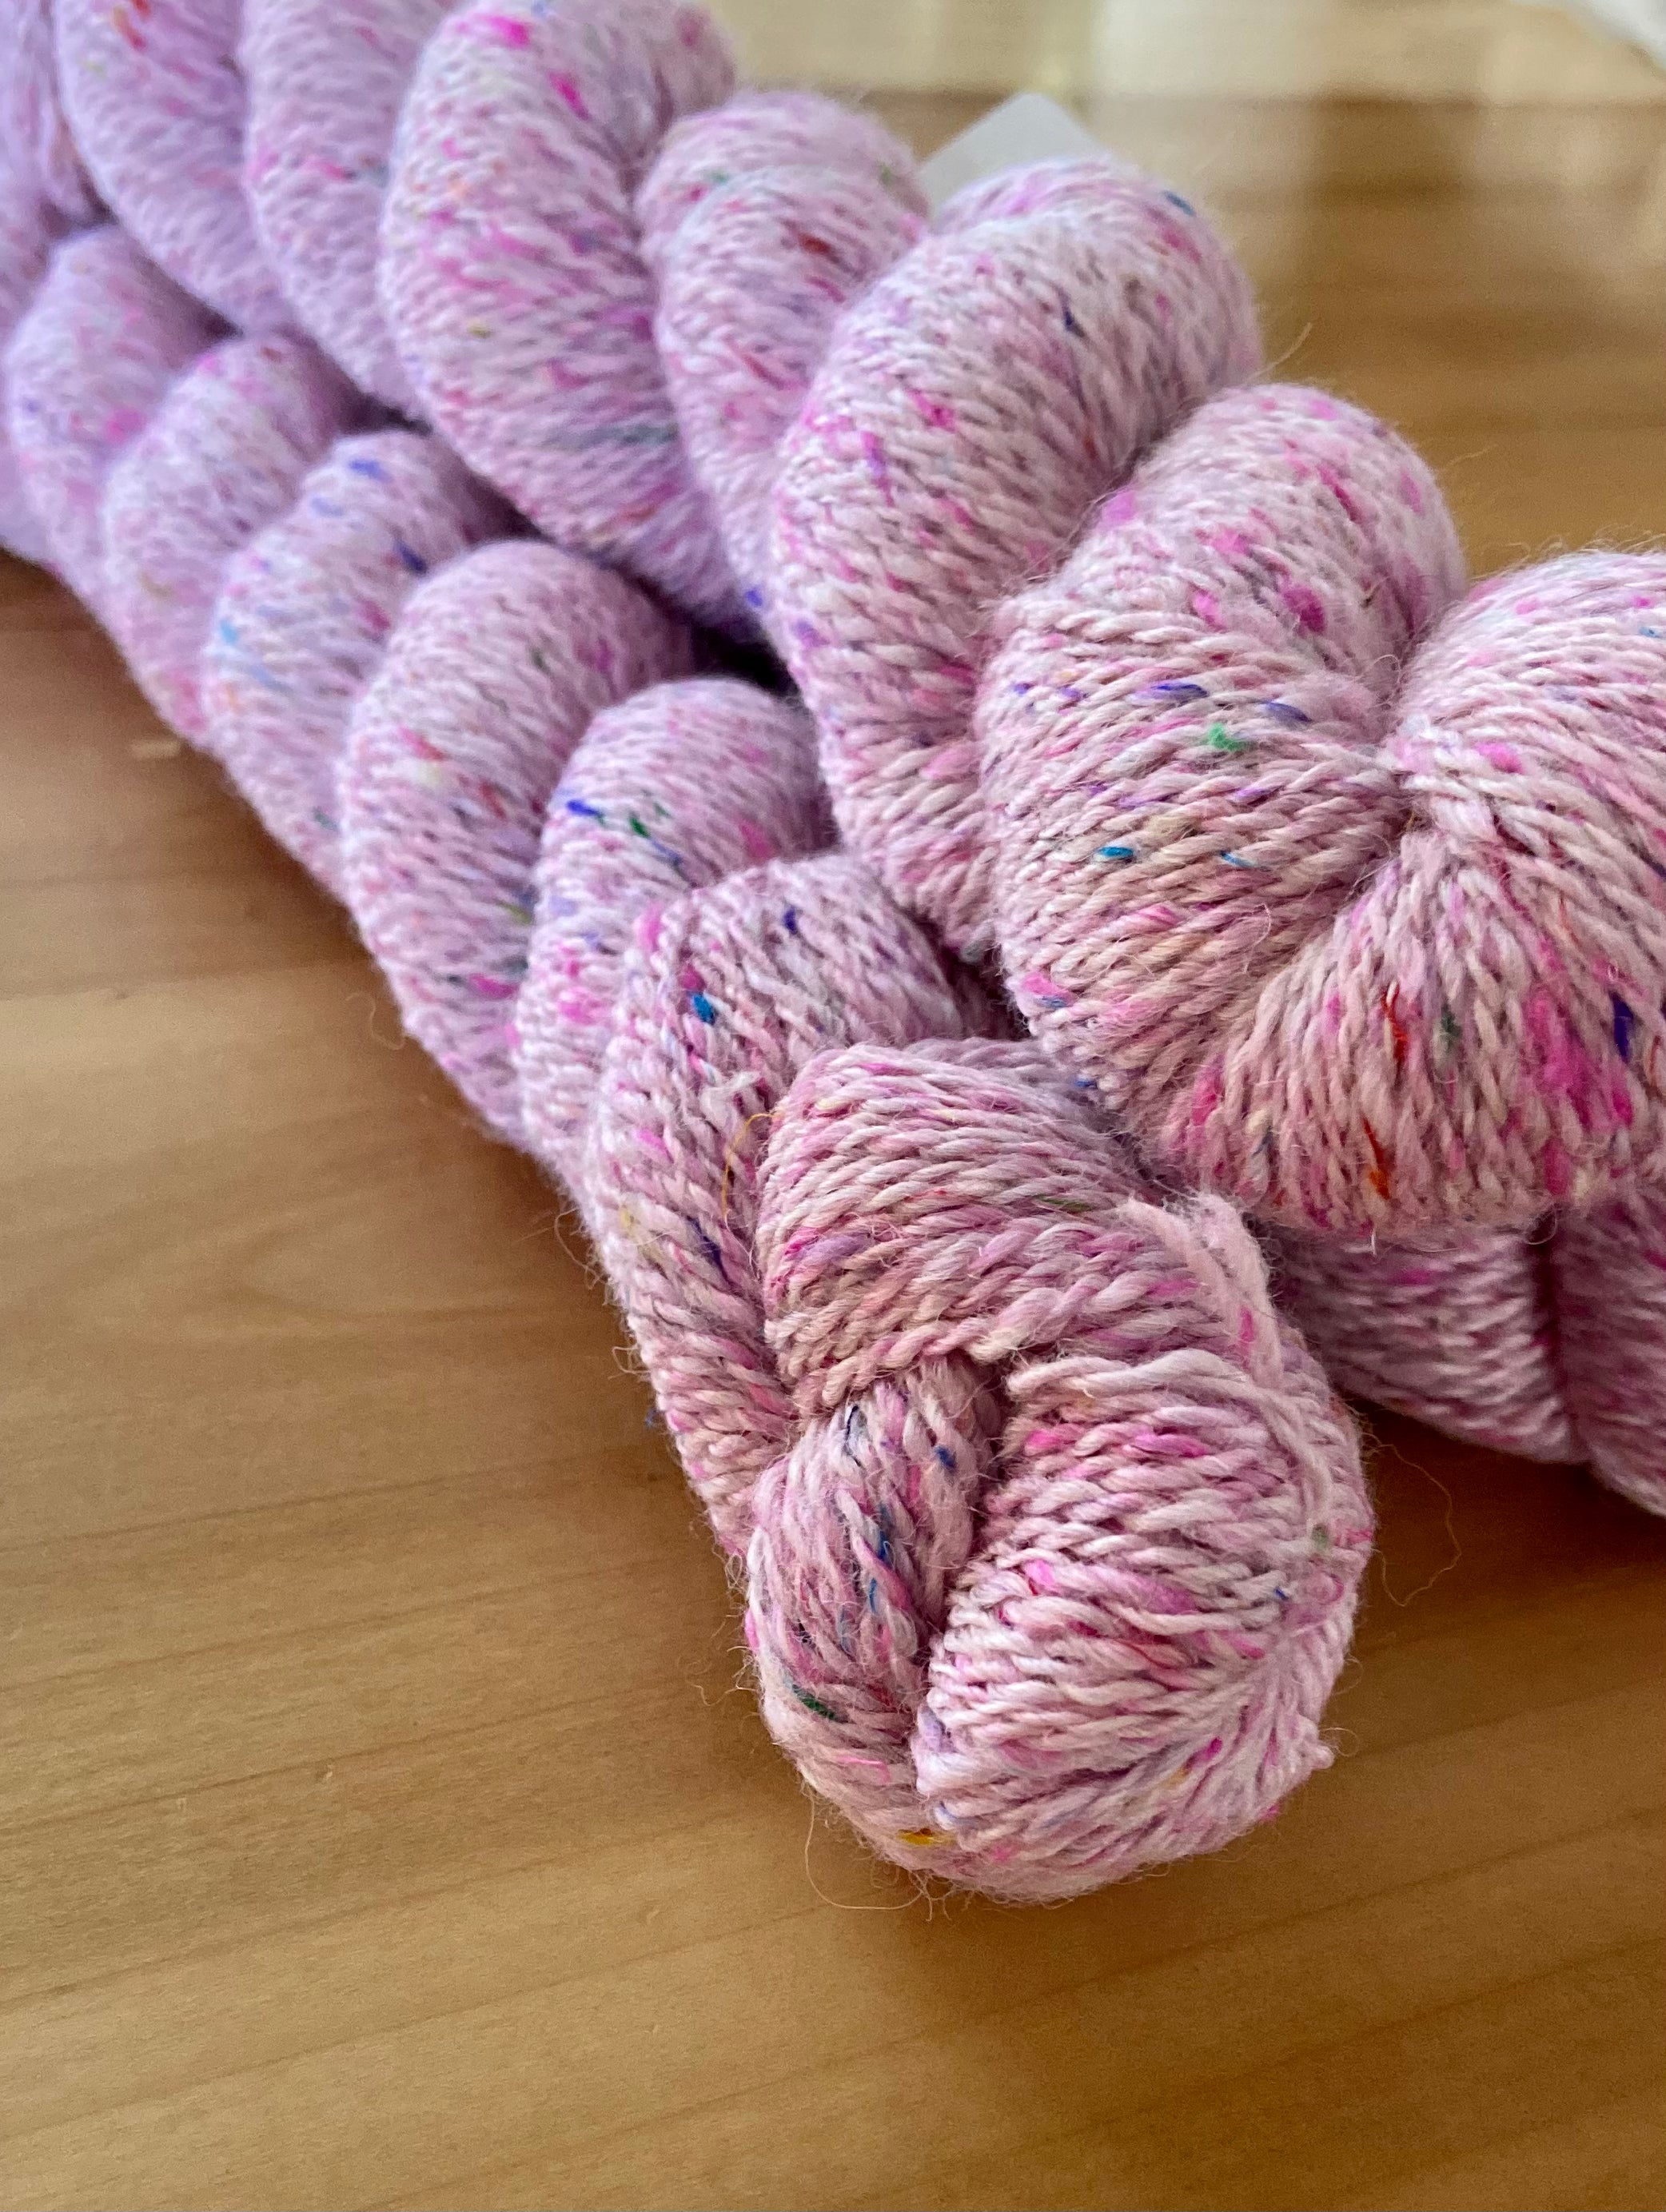 Willow Chunky Knit Yarn